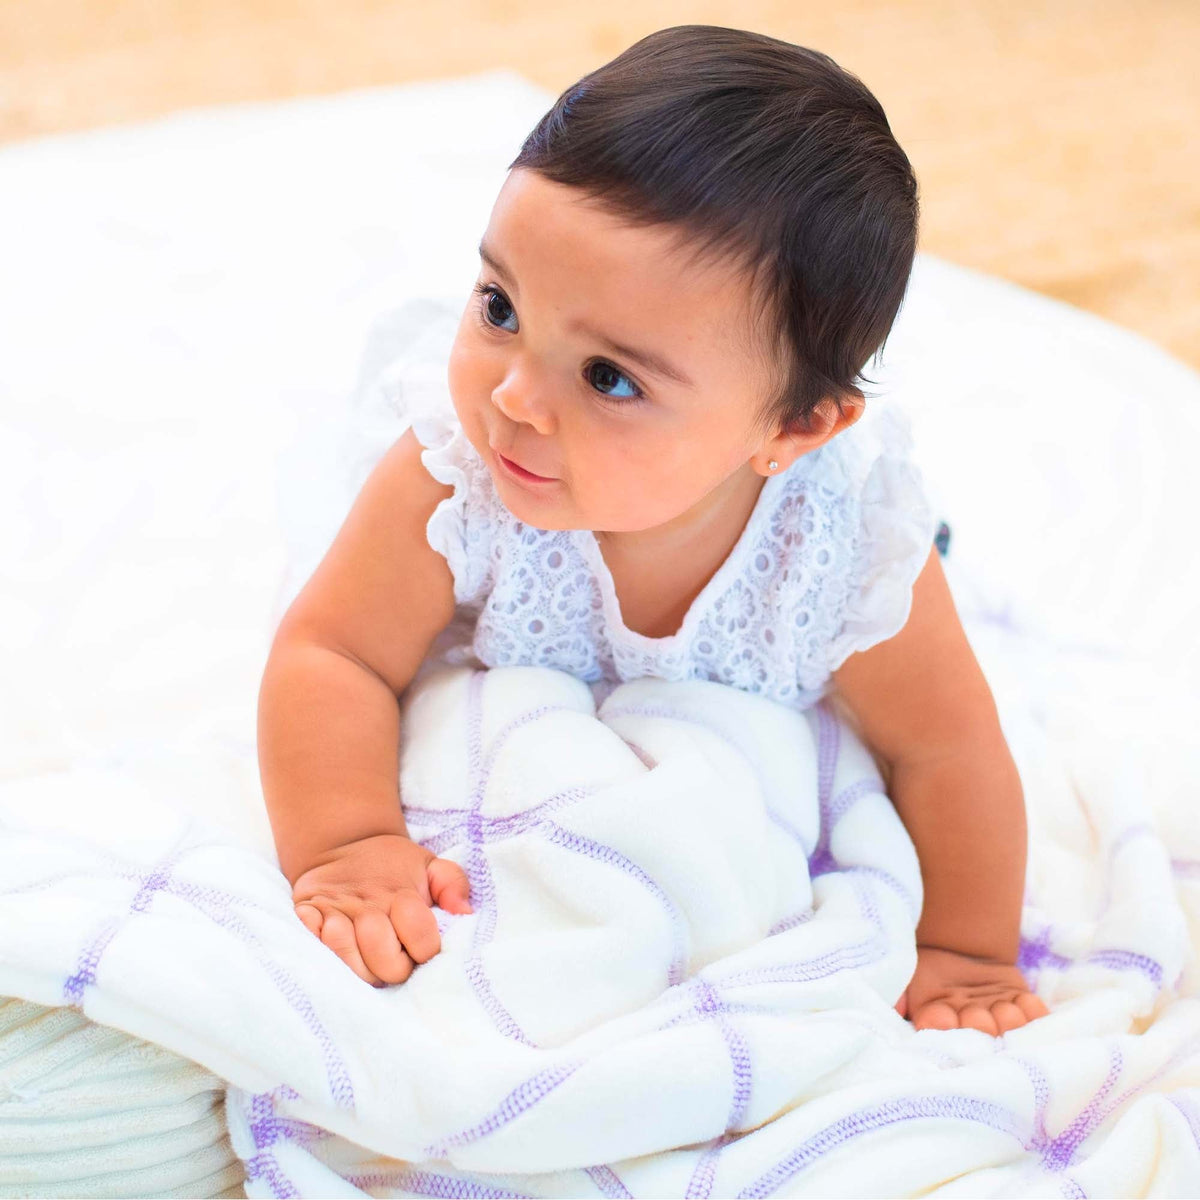 Baby Quilt - Gardenia on Luster Loft Fleece - American Blanket Company